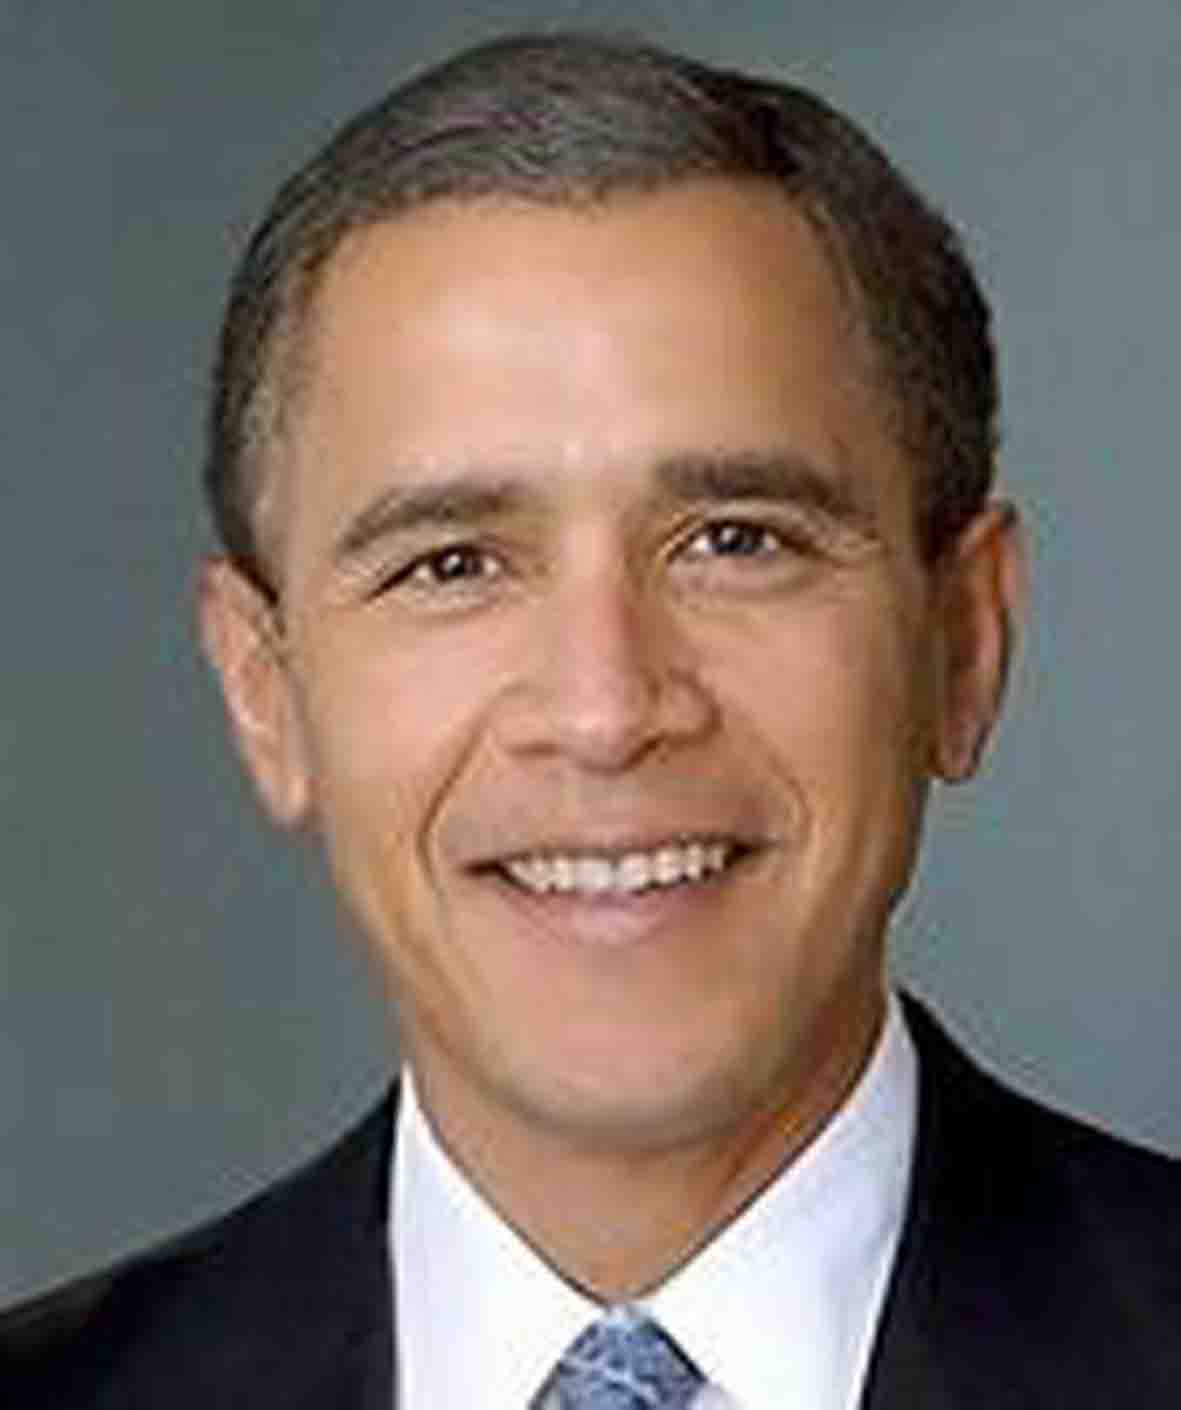 George Bush Swap Obama Face Funny Image